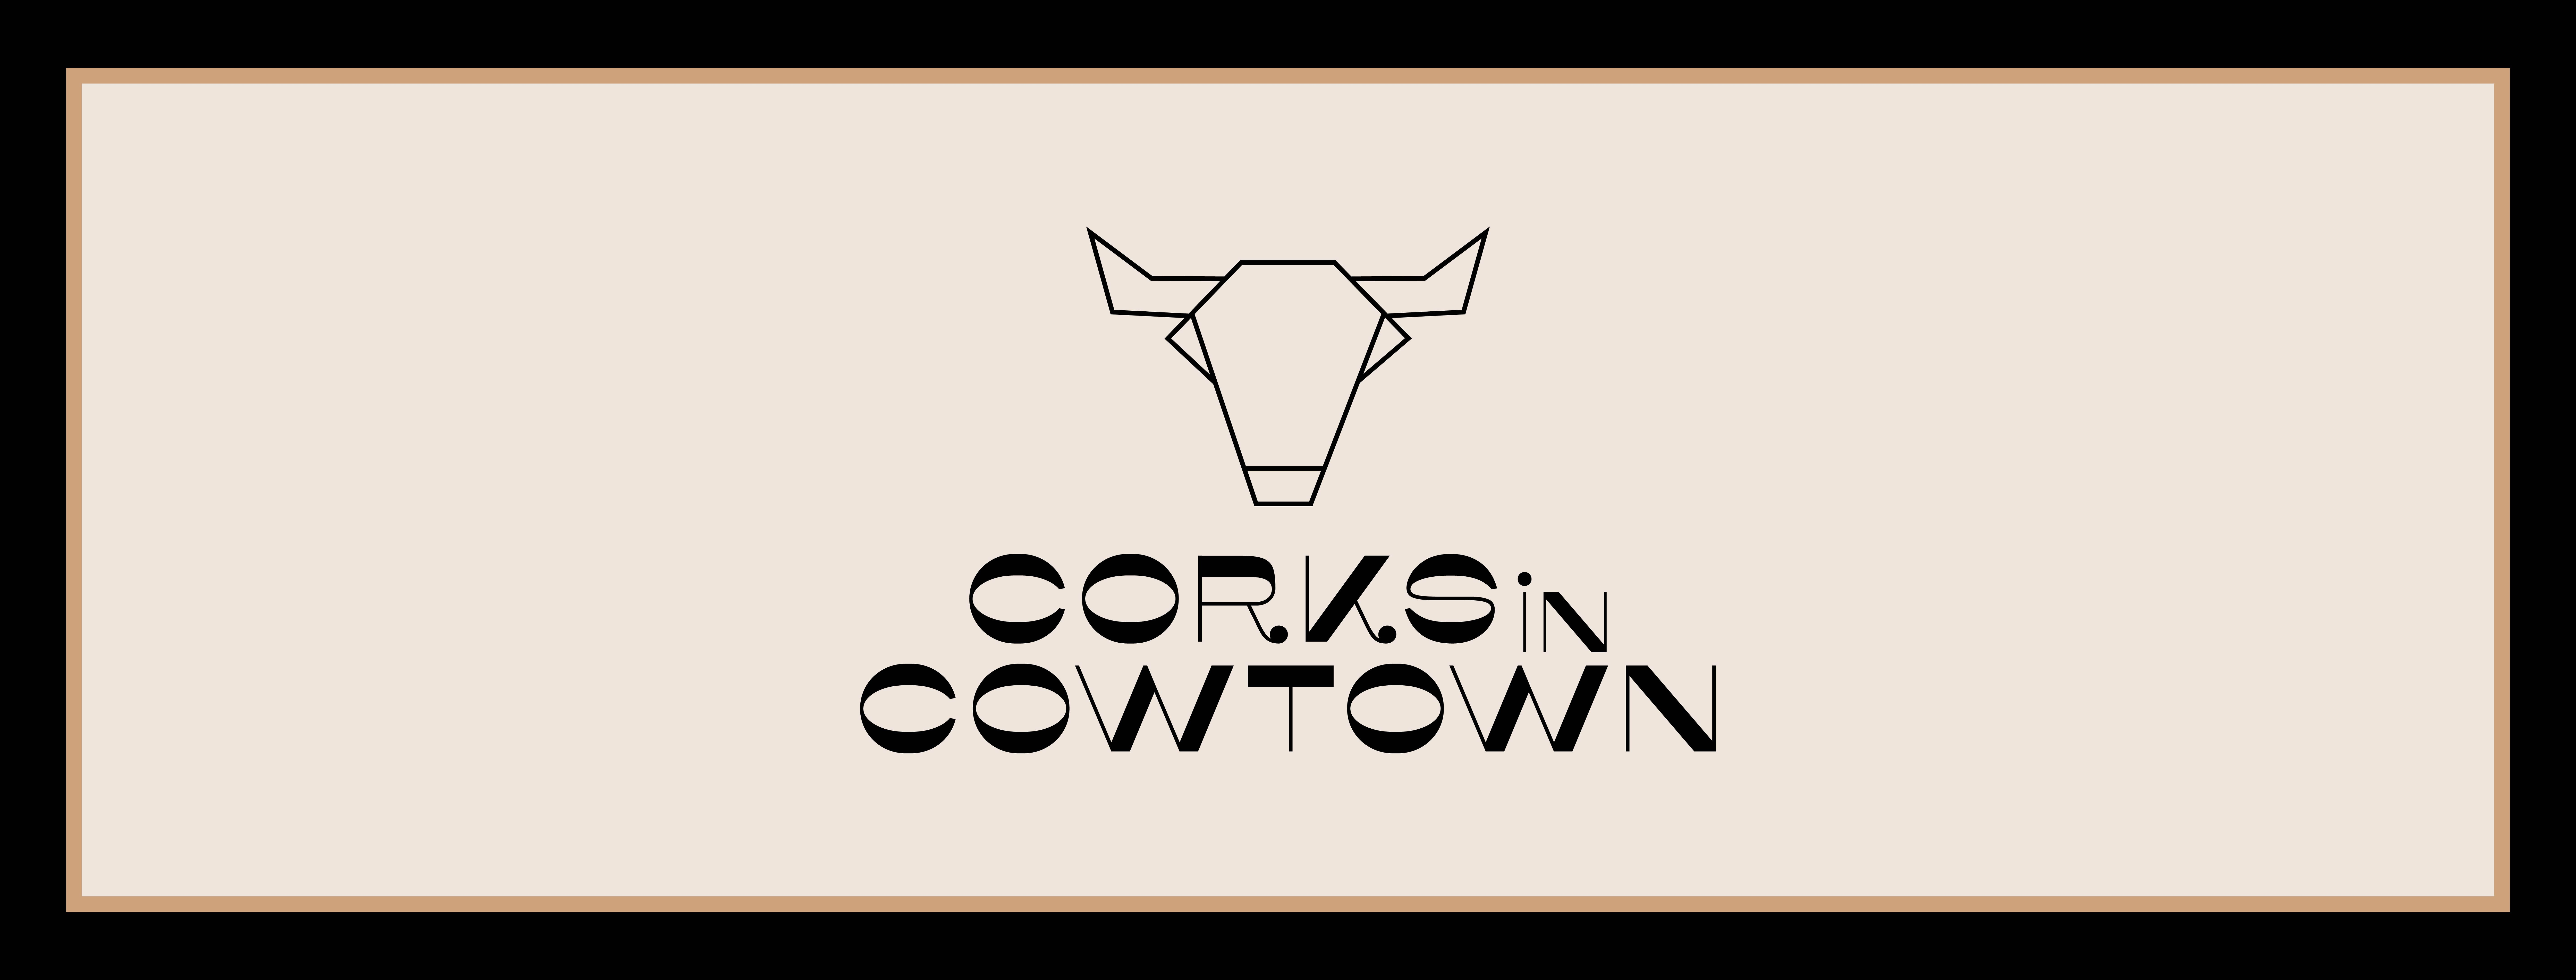 Corks In Cowtown header image 1